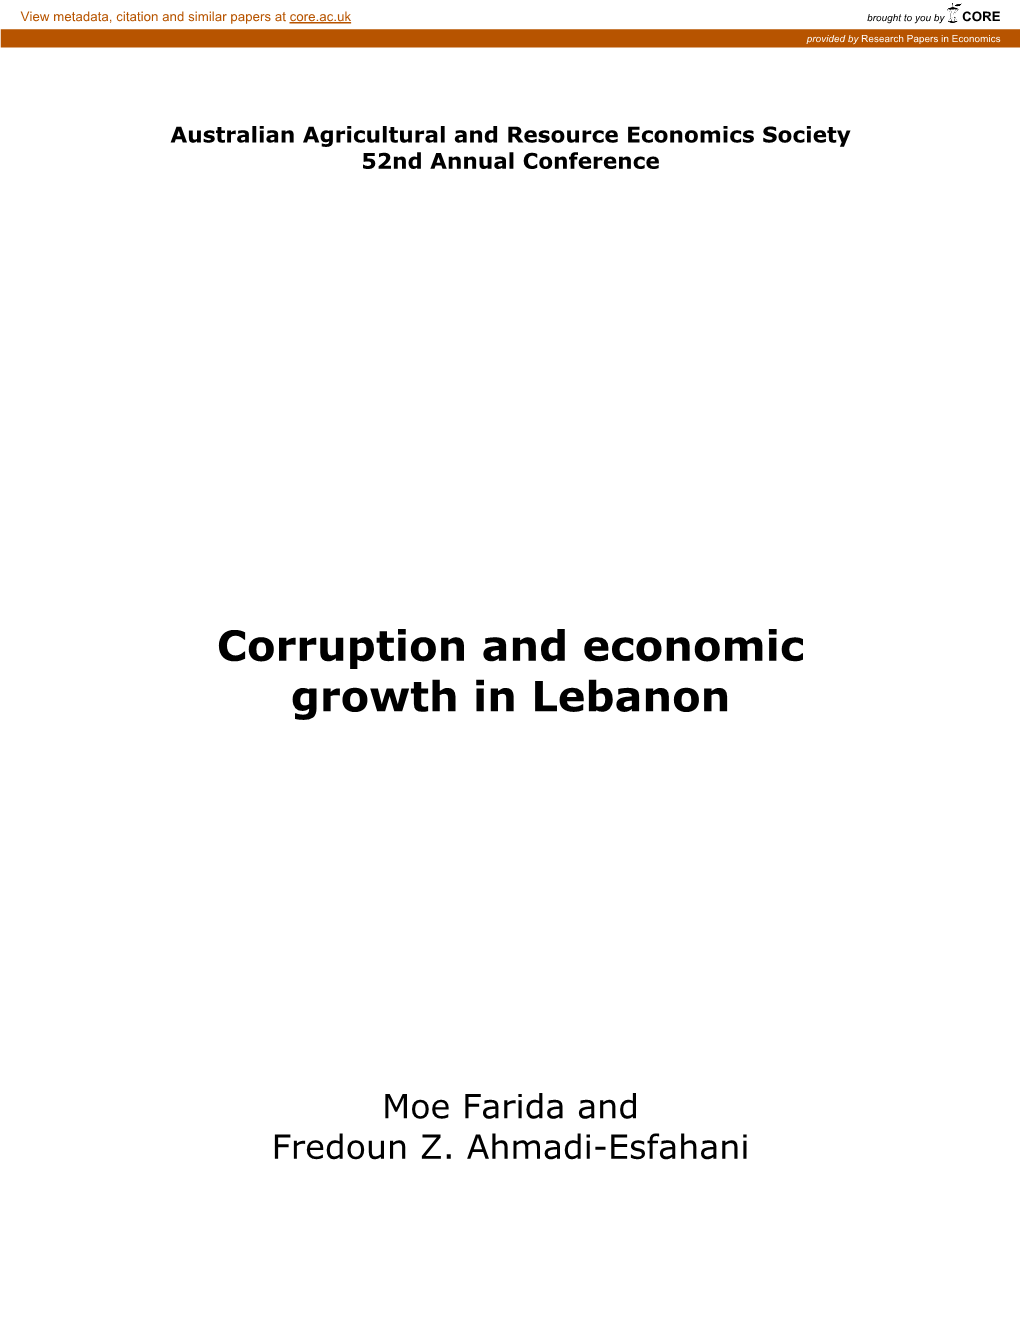 Corruption and Economic Growth in Lebanon